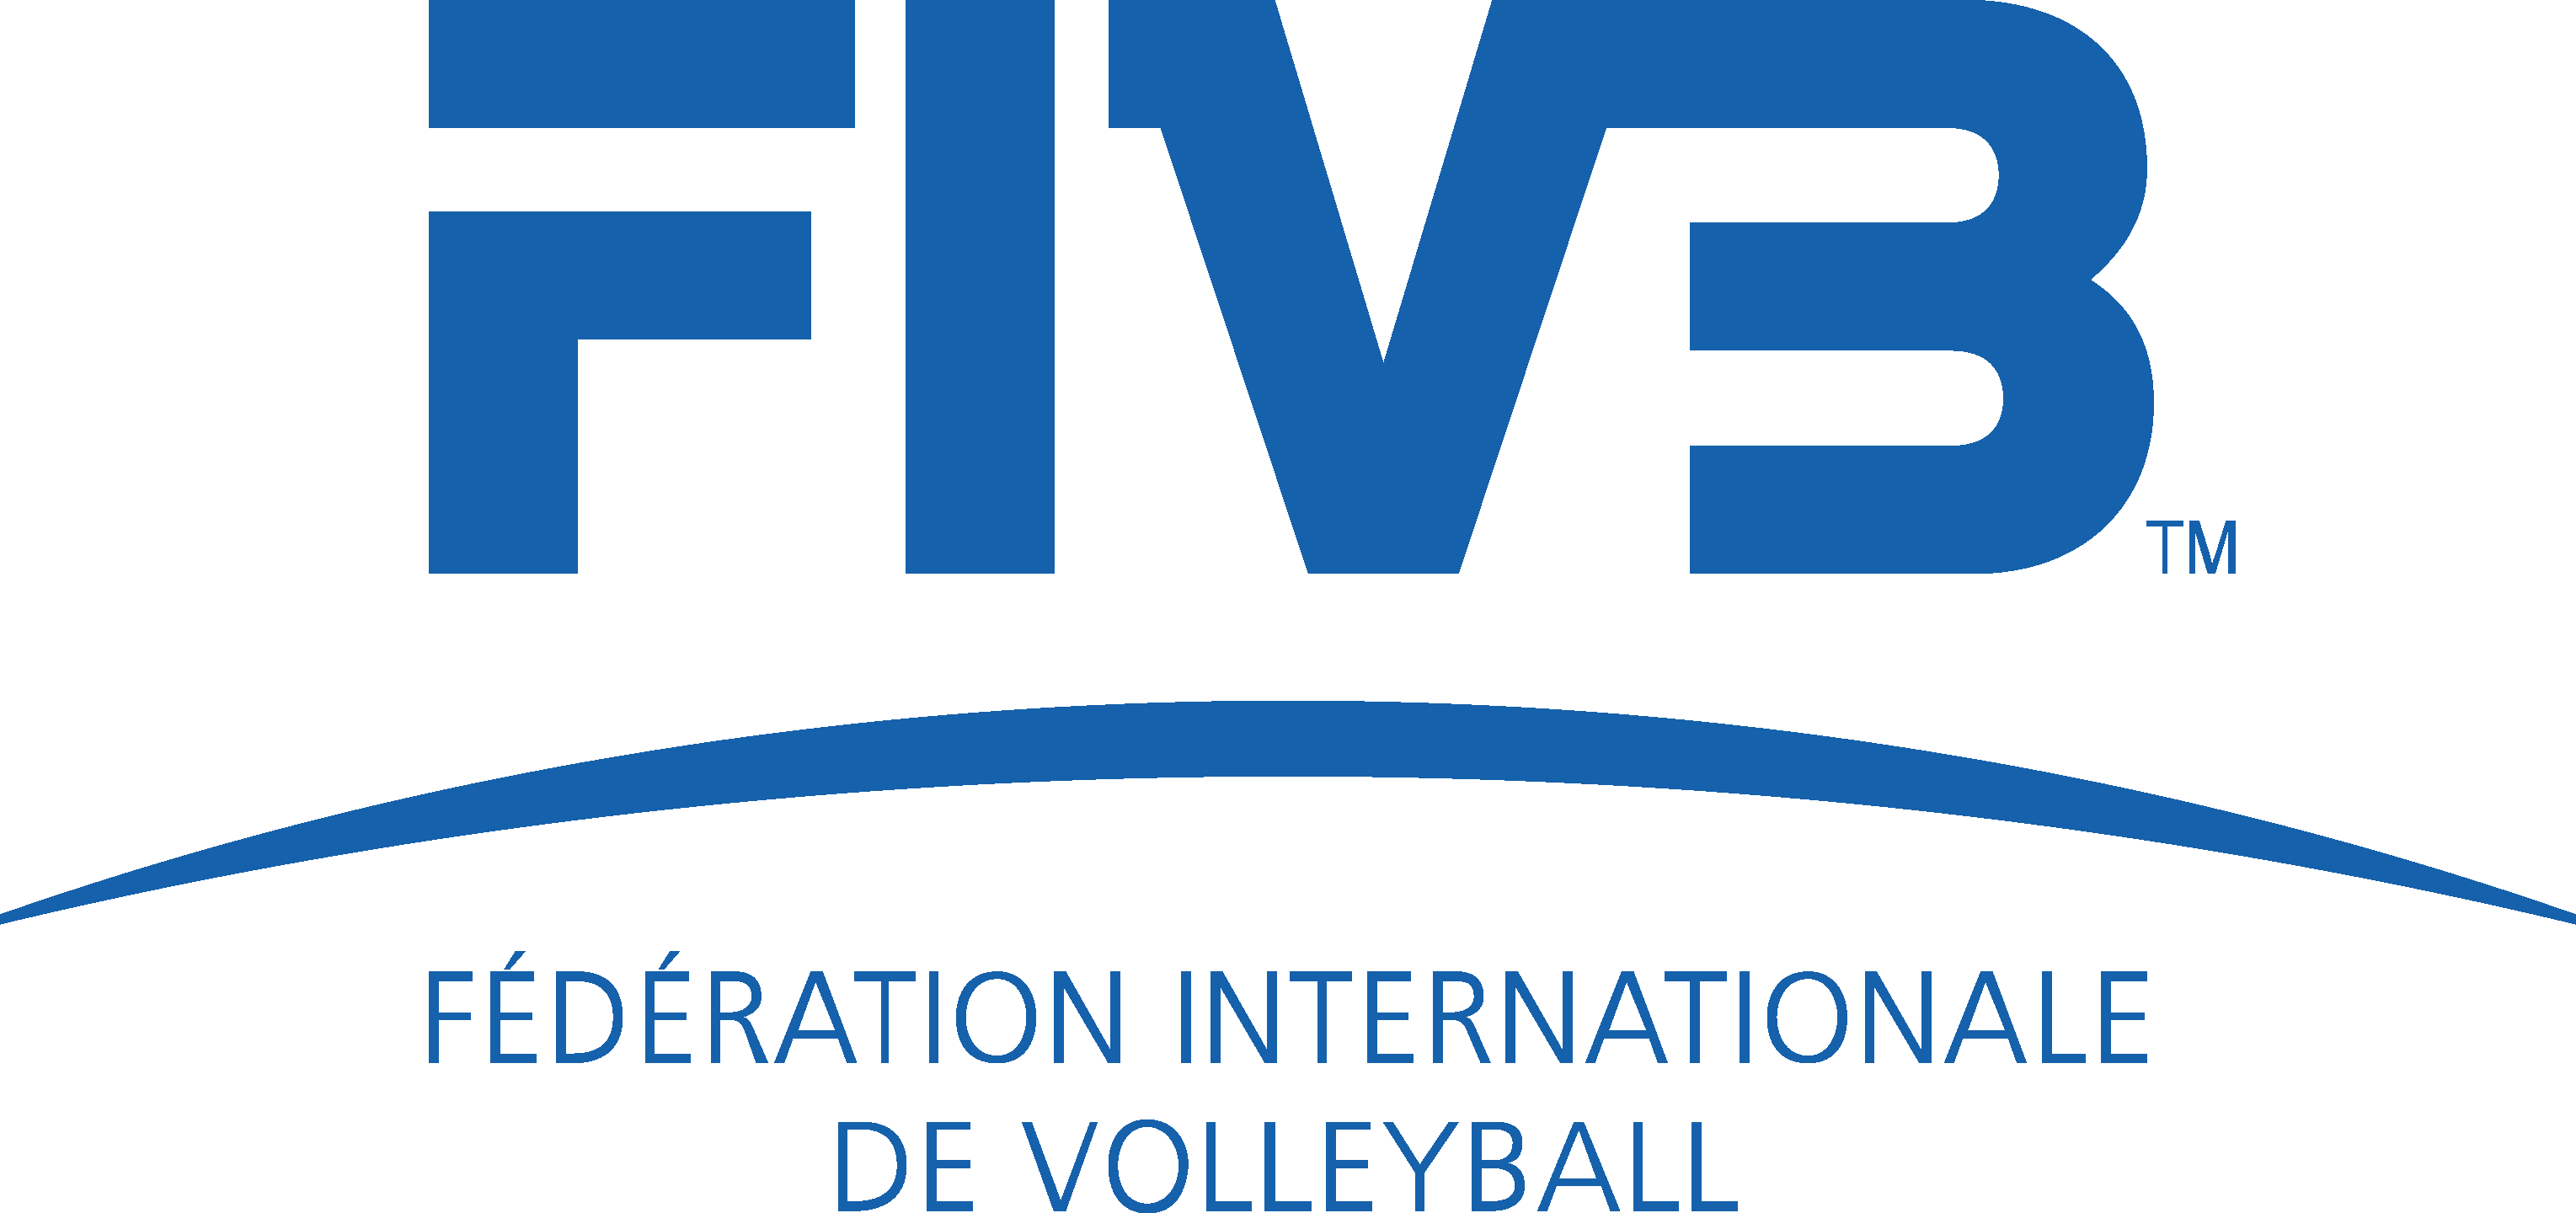 Federation-Internationale-de-Volleyball-FIVB-logo